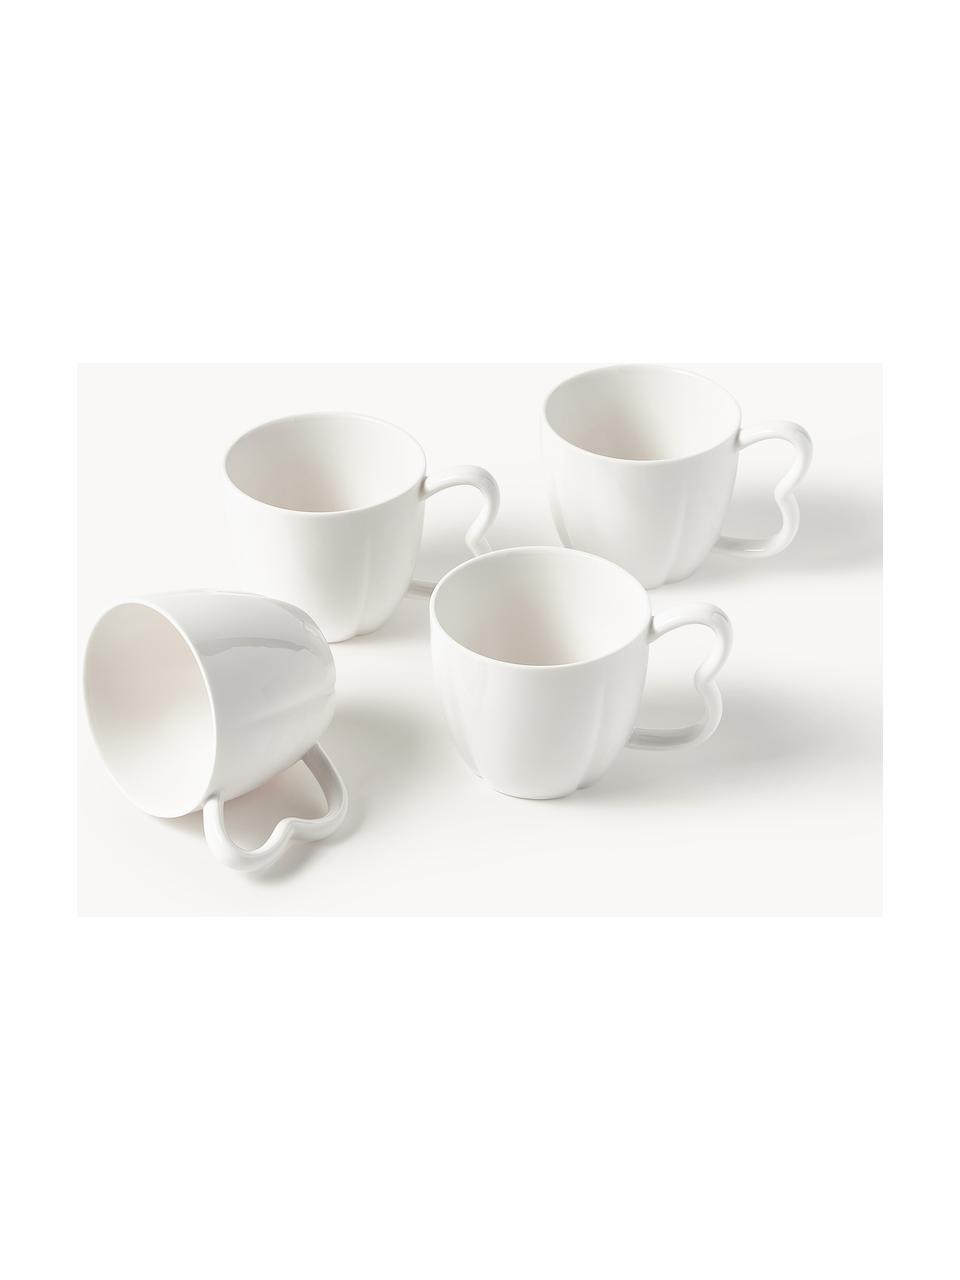 Porcelánové hrnky Nera, 4 ks, Glazovaný porcelán, Lesklá bílá, Ø 10 cm, V 10 cm, 380 ml